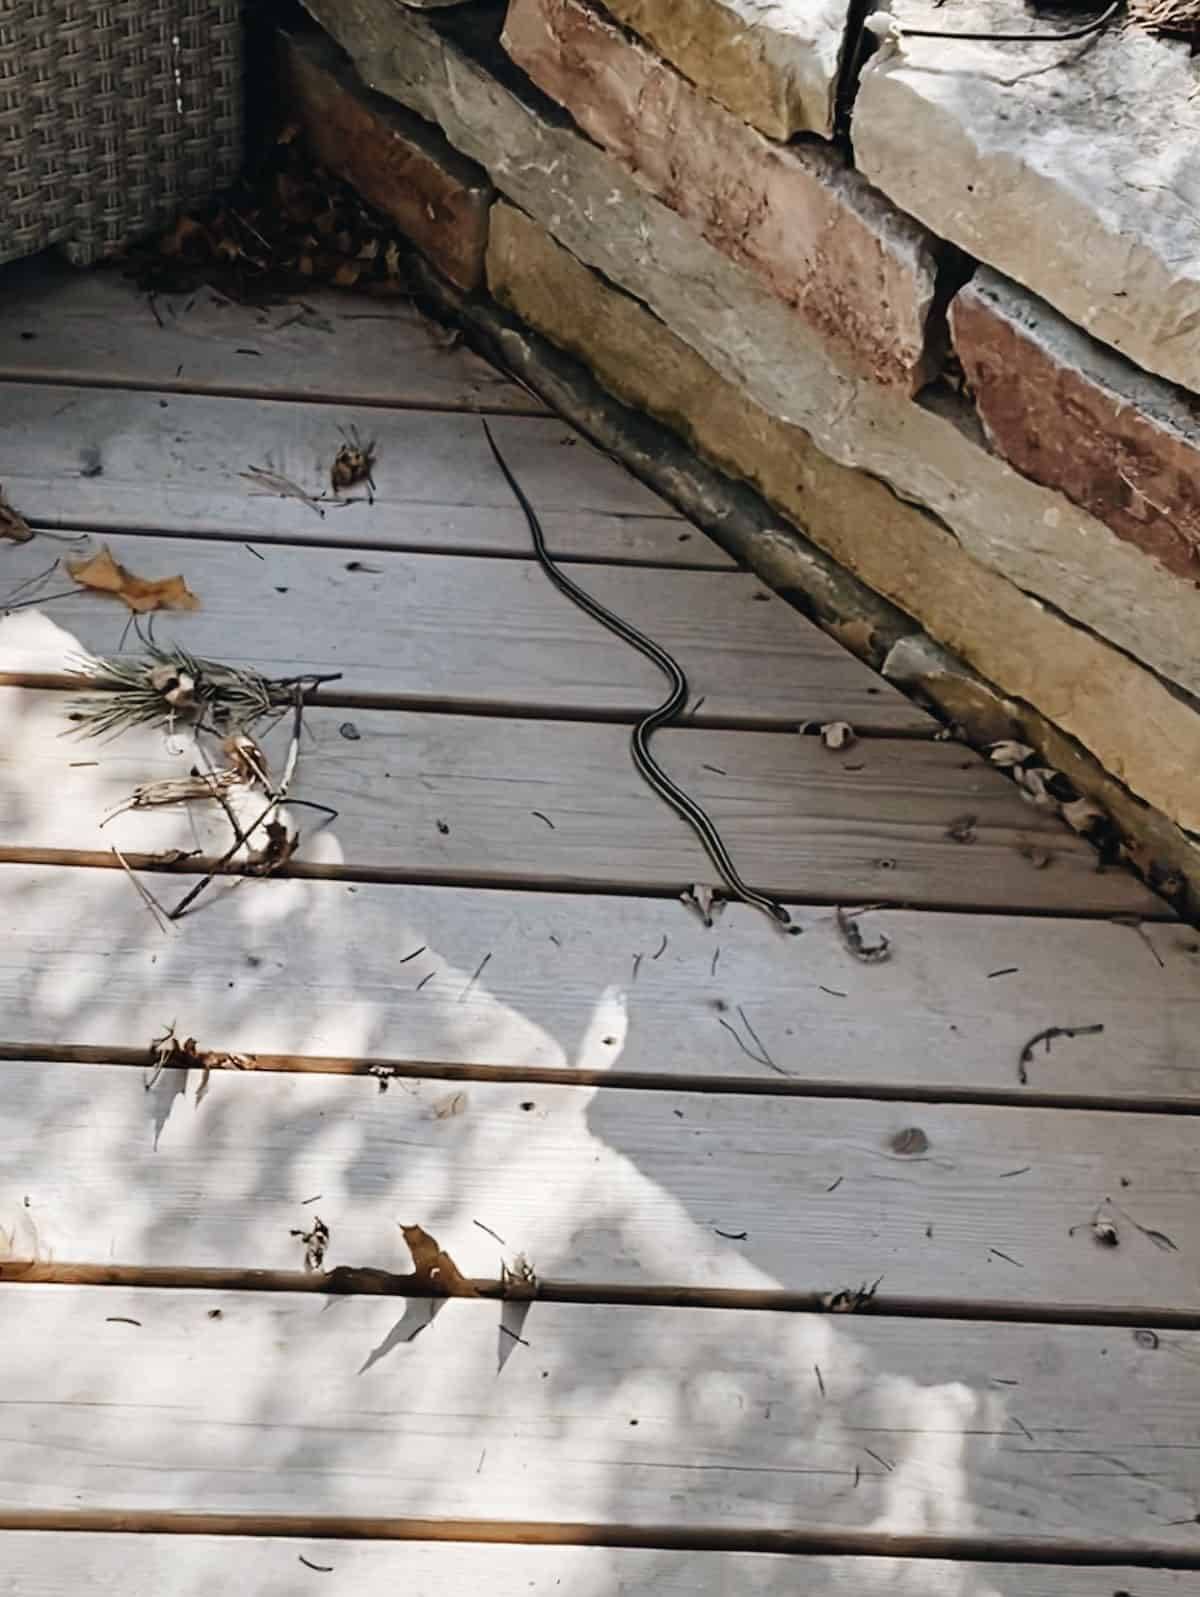 A snake on a deck.